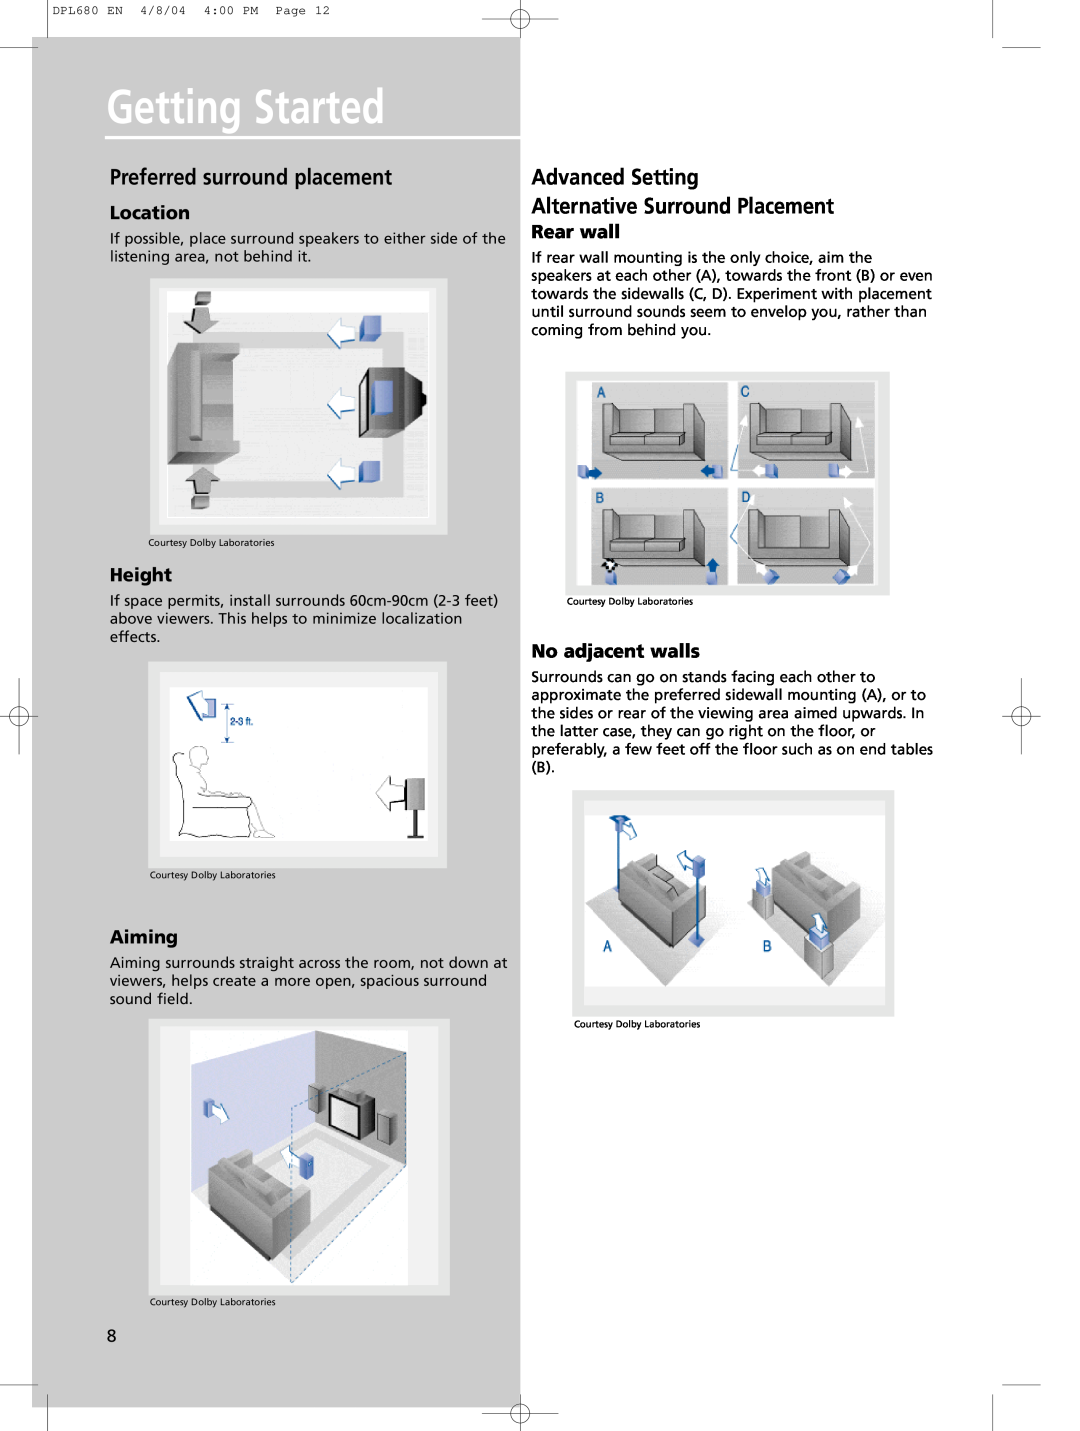 Technicolor - Thomson DPL680 manual Preferred surround placement, Advanced Setting Alternative Surround Placement, Location 